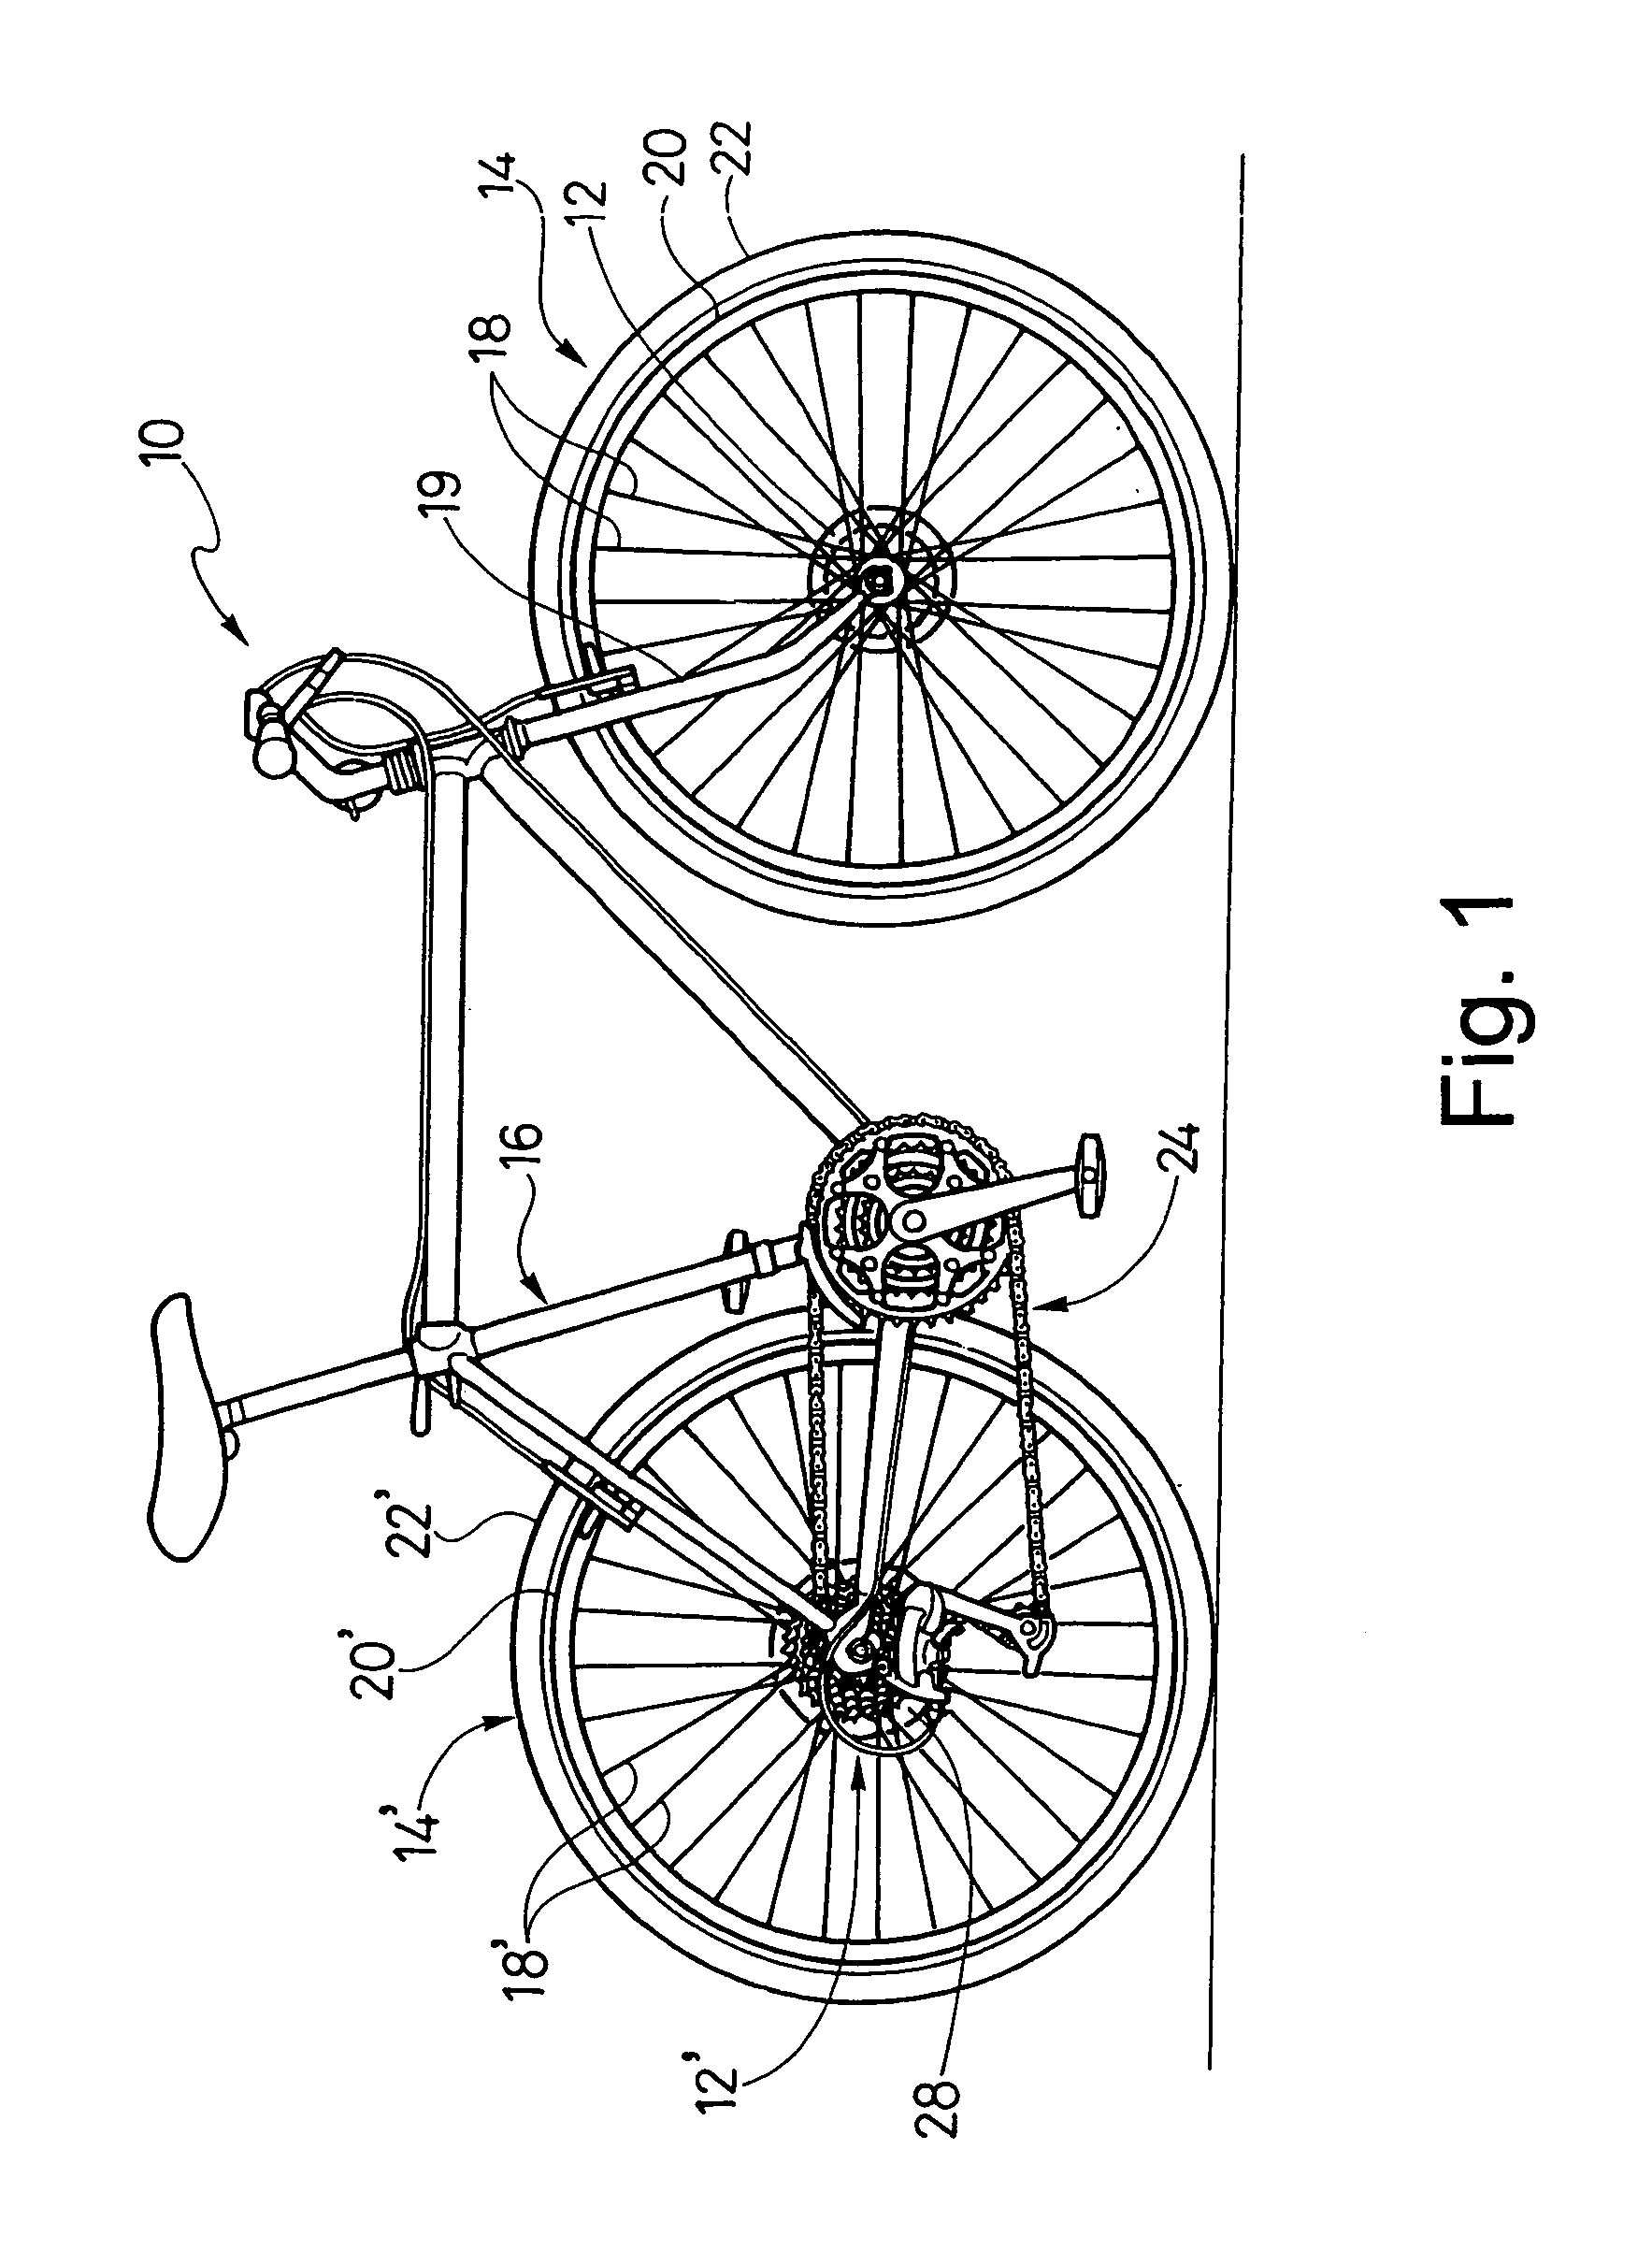 Bicycle hub